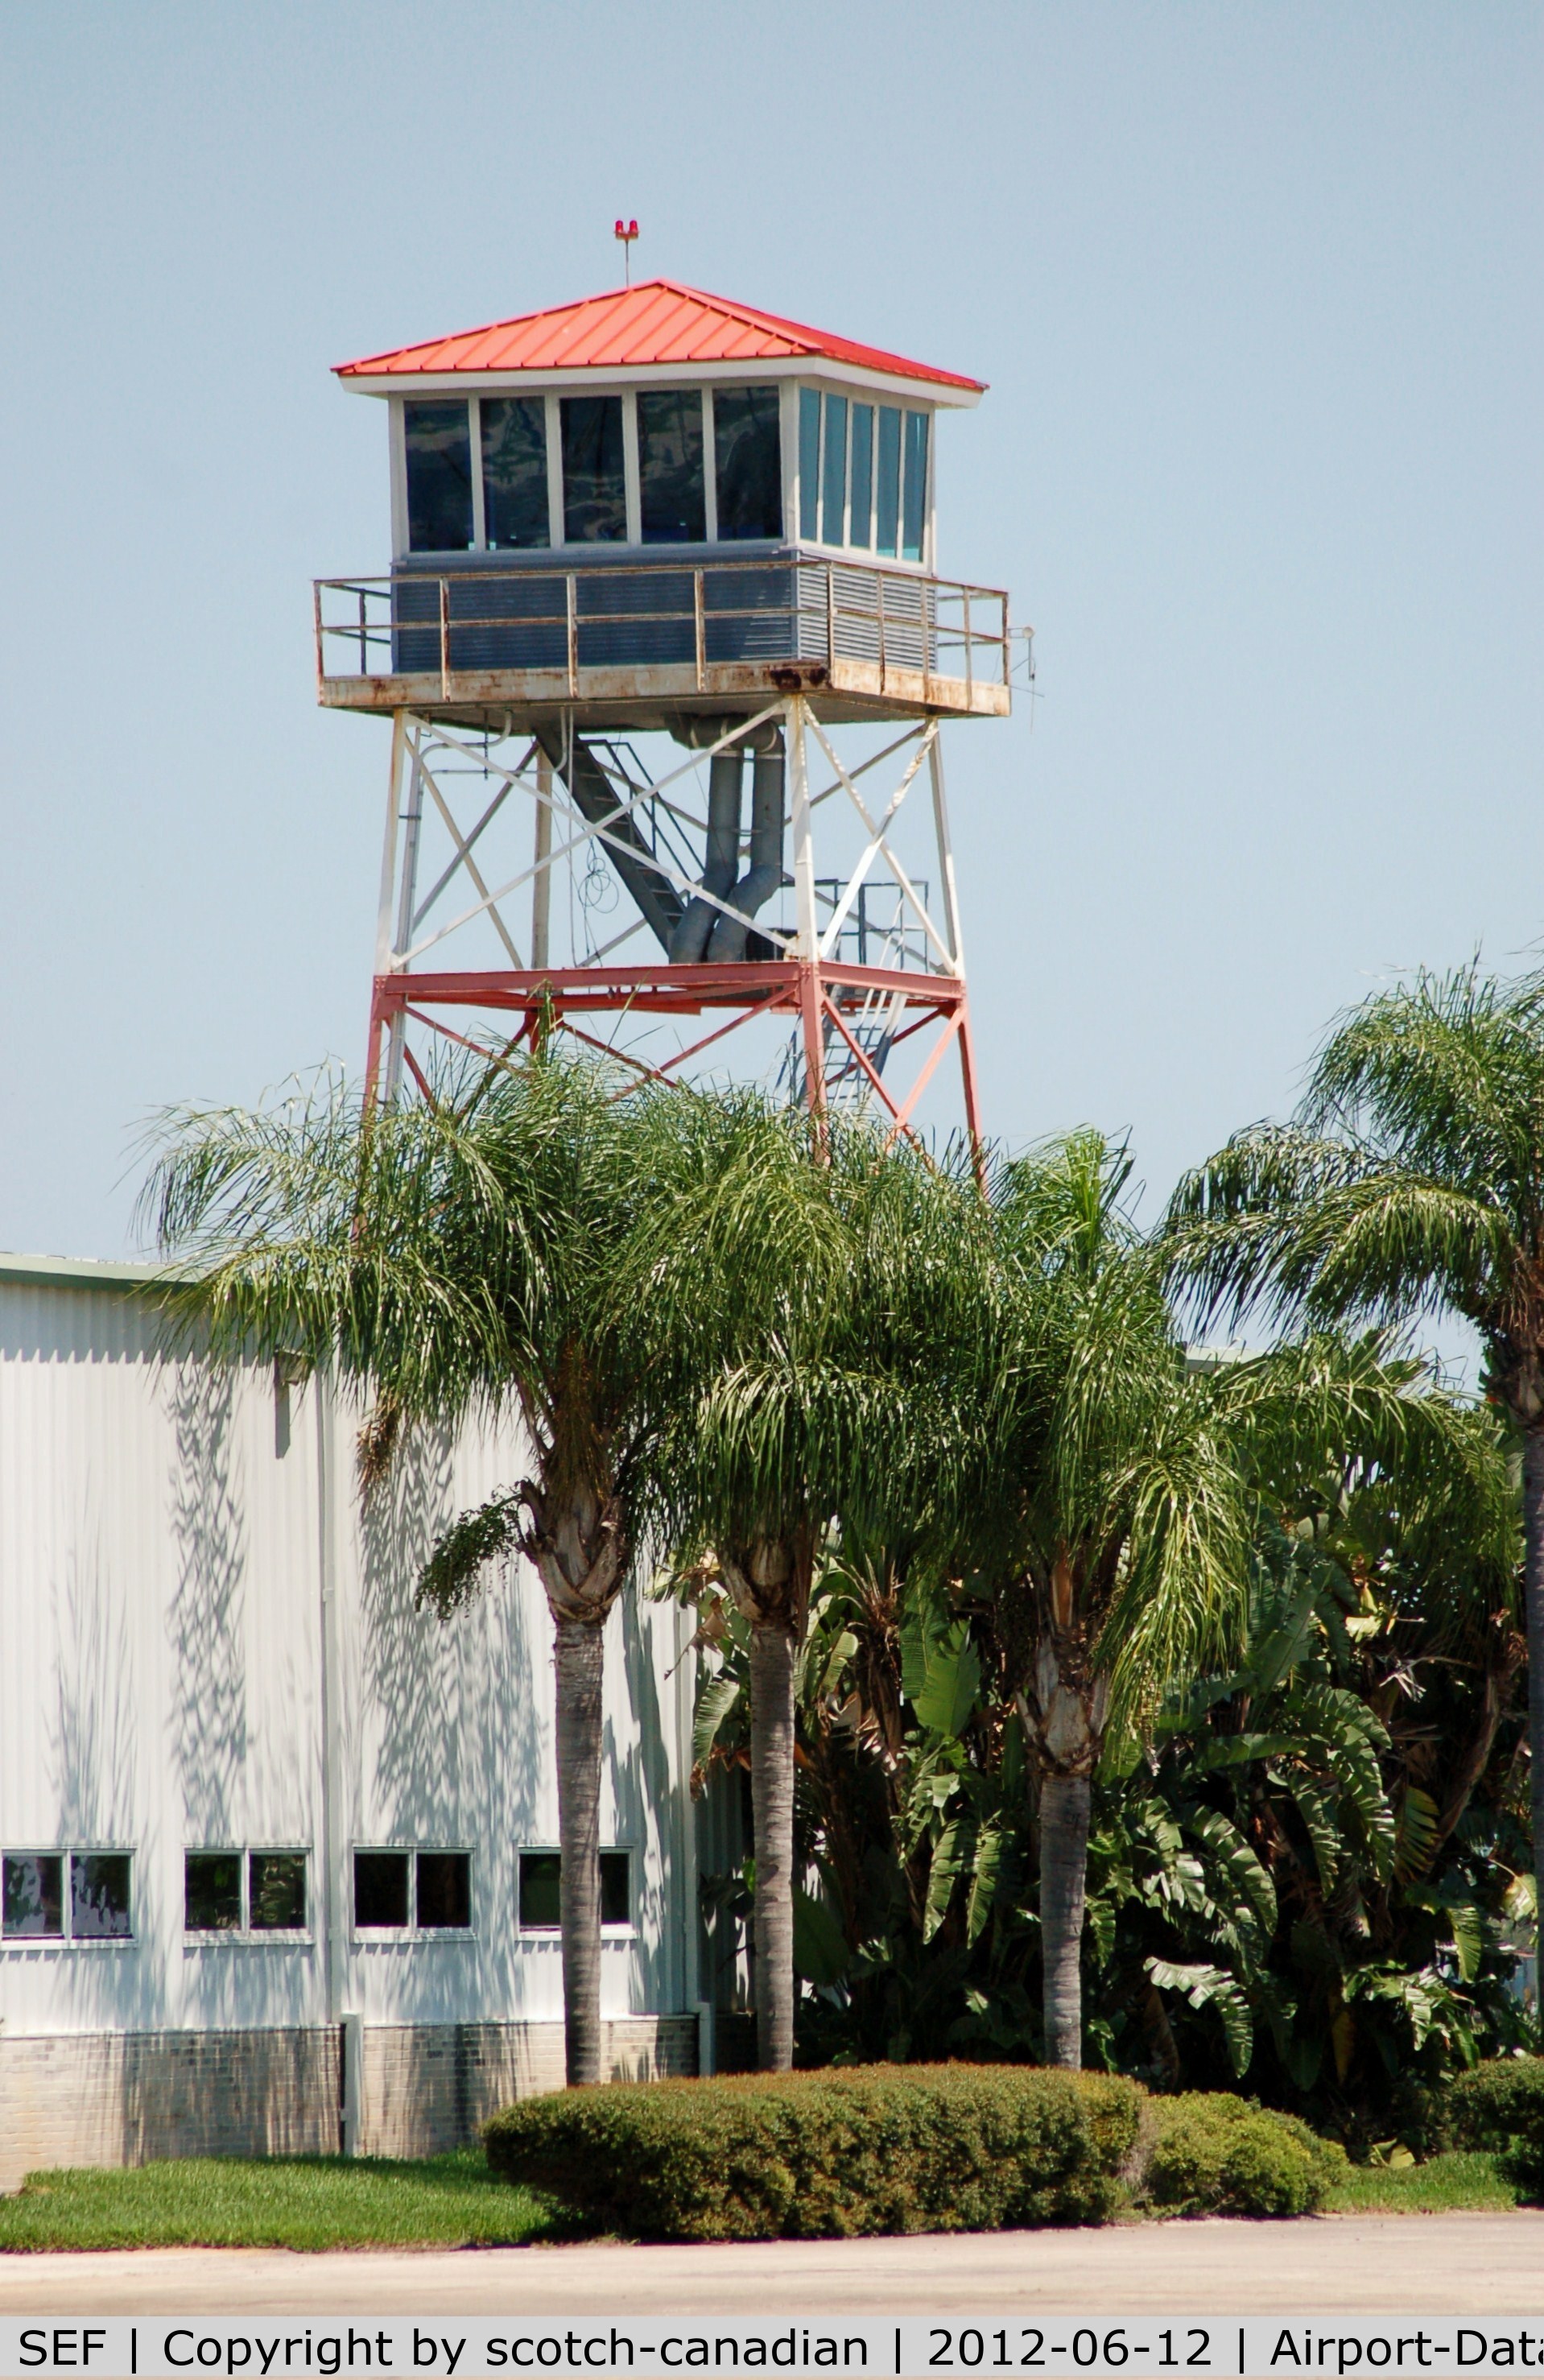 Sebring Regional Airport (SEF) - Control Tower at Sebring Regional Airport, Sebring, FL